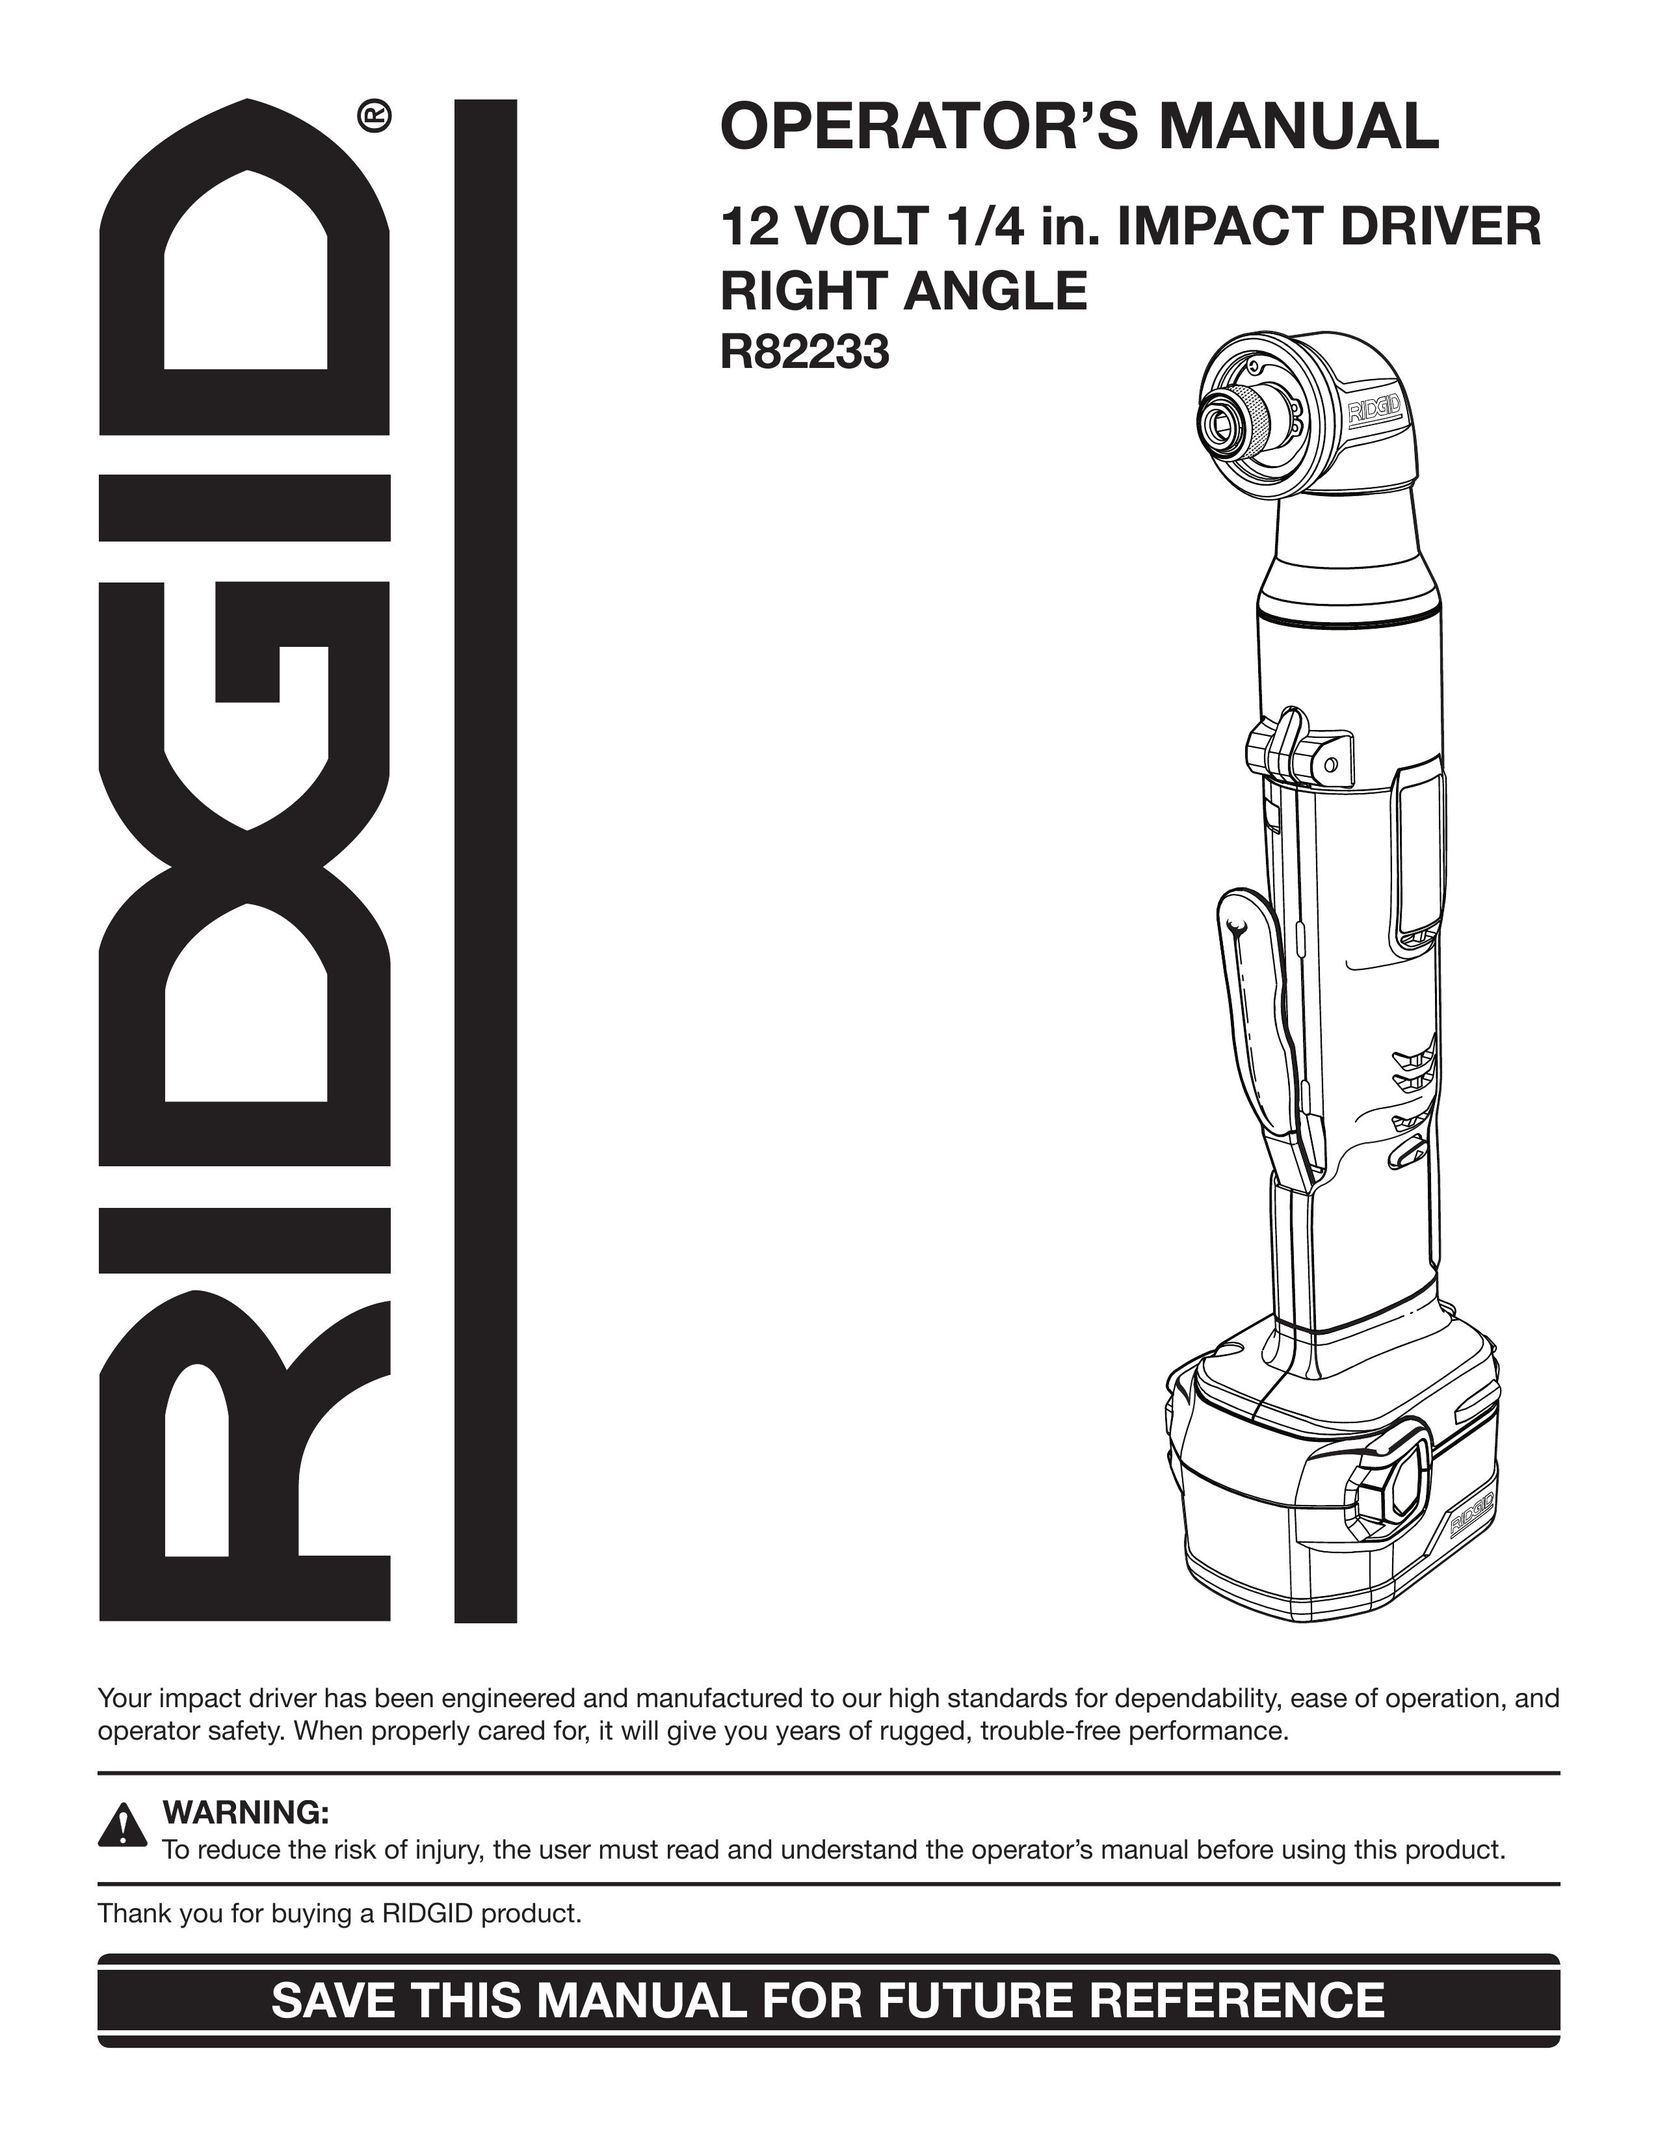 RIDGID R82233 Impact Driver User Manual